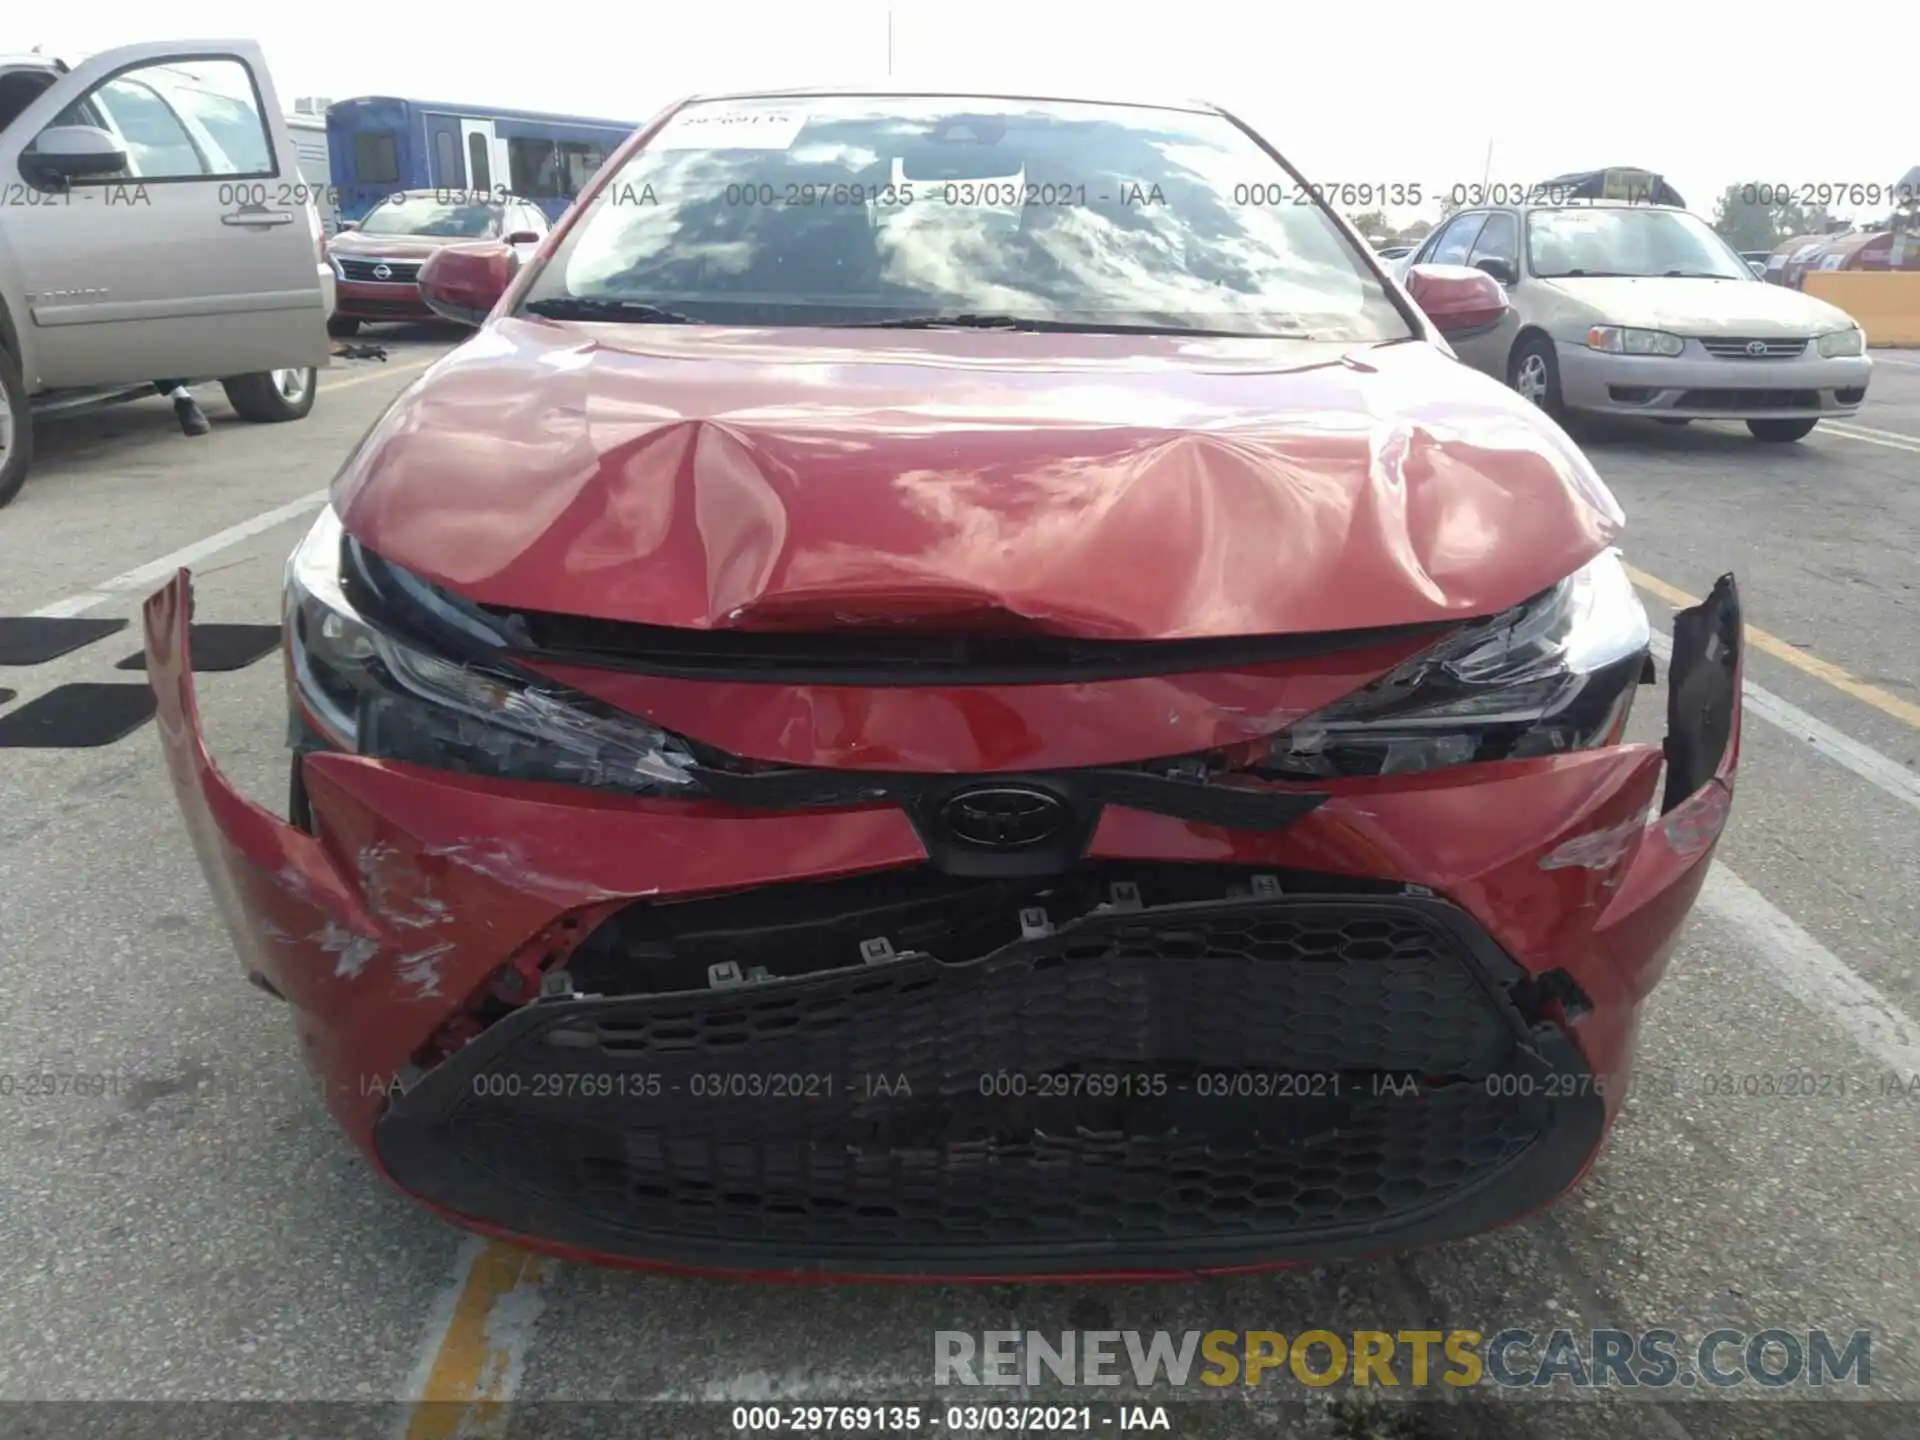 6 Photograph of a damaged car JTDEPRAEXLJ032033 TOYOTA COROLLA 2020